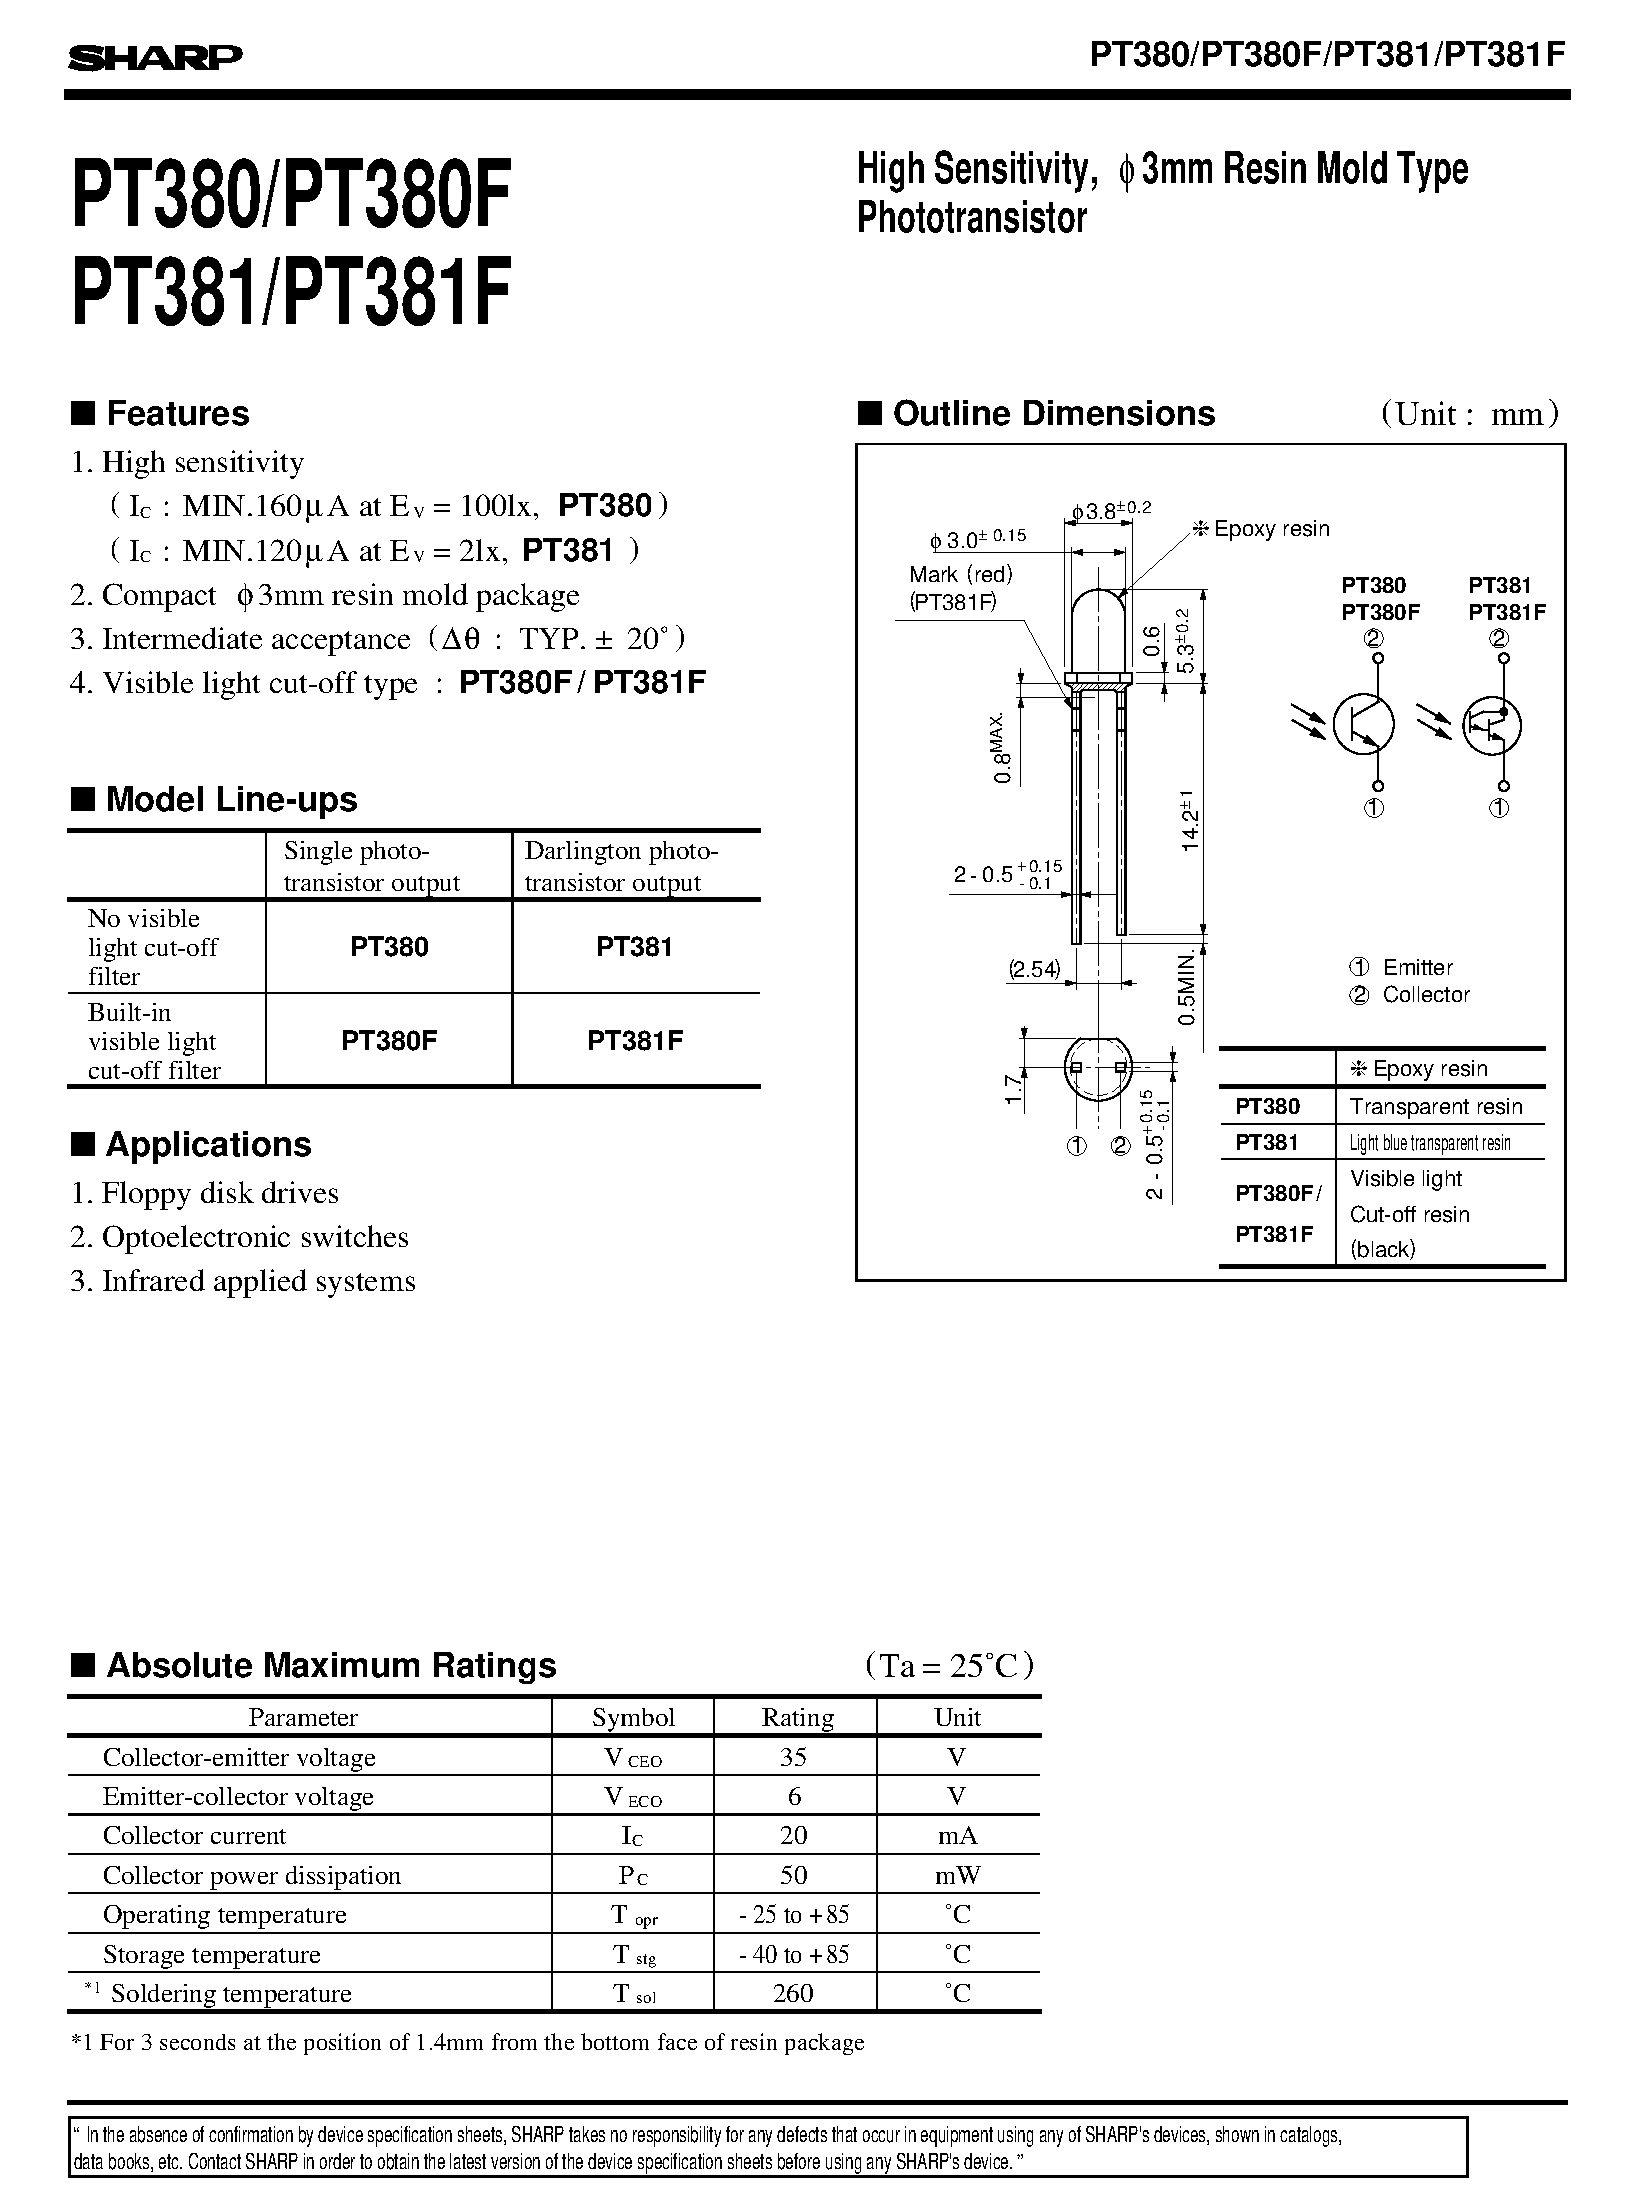 Datasheet PT380F - High Sensitivity/ f 3mm Resin Mold Type Phototransistor page 1